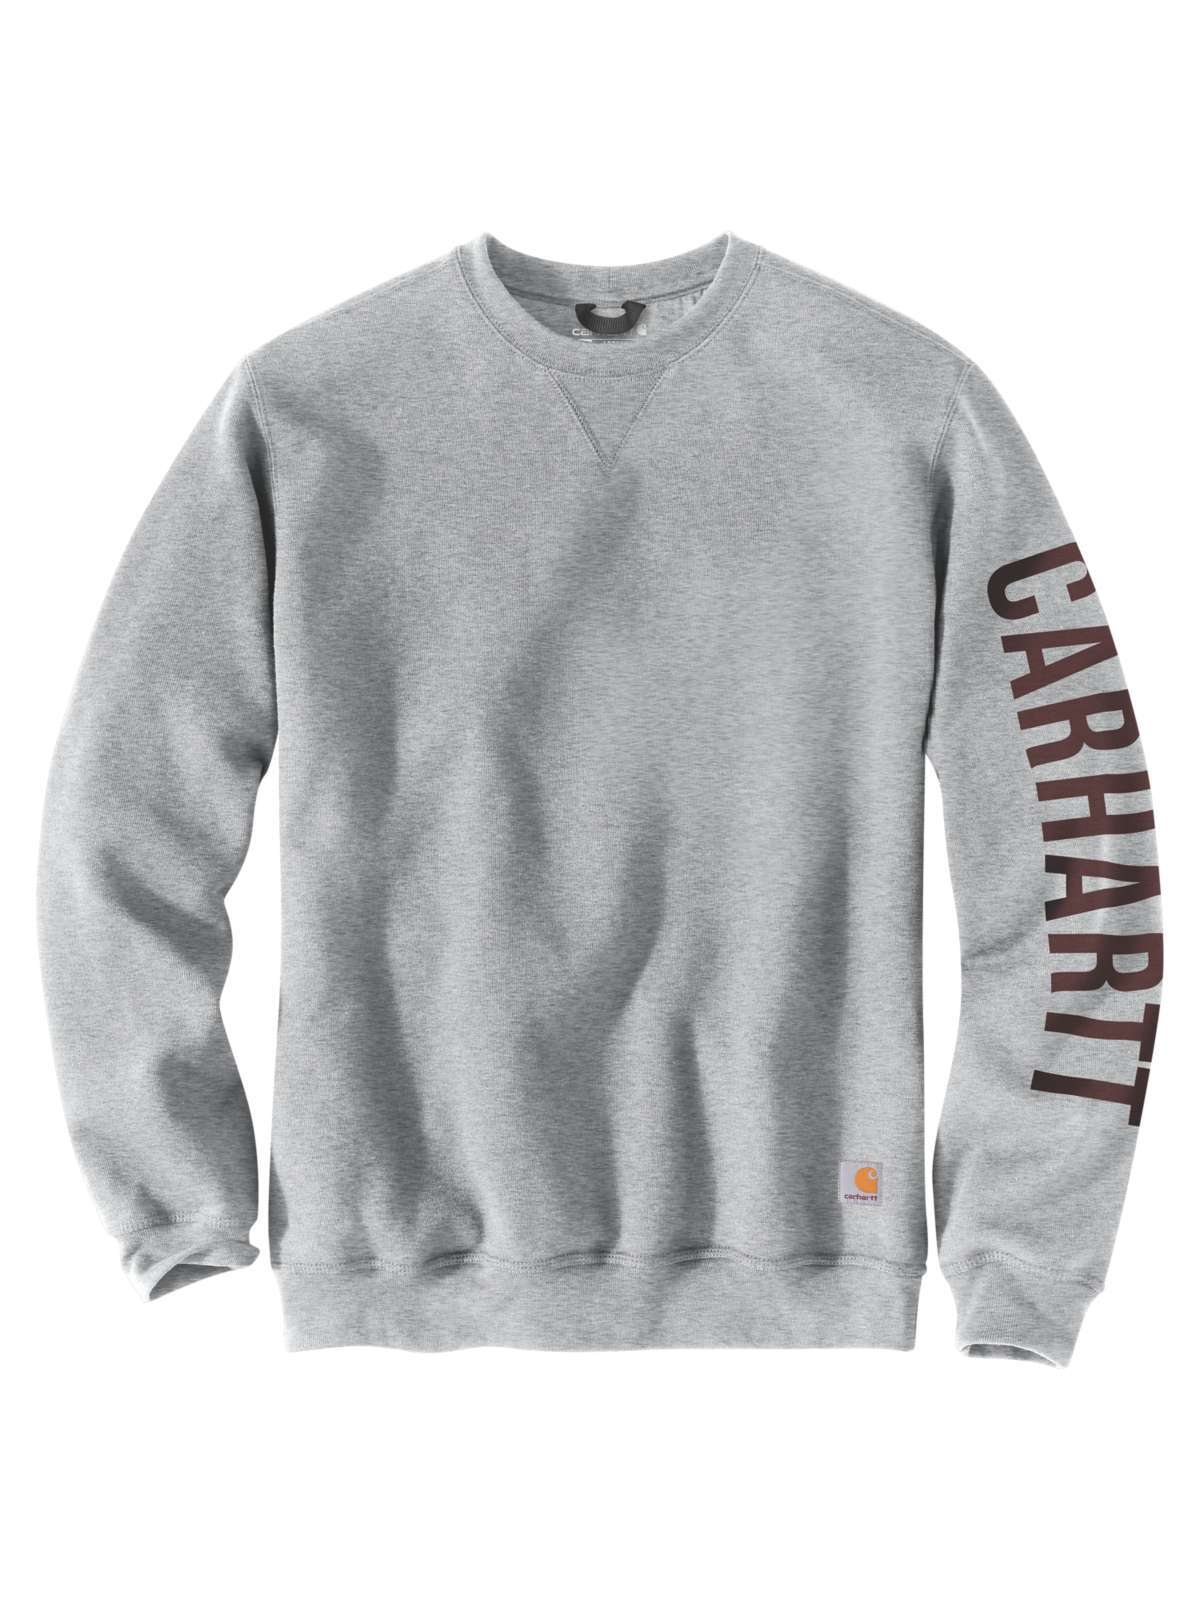 Рубашка CARHARTT Crewneck Sweatshirt, светло-серый пуловер carhartt lightweight crewneck серый